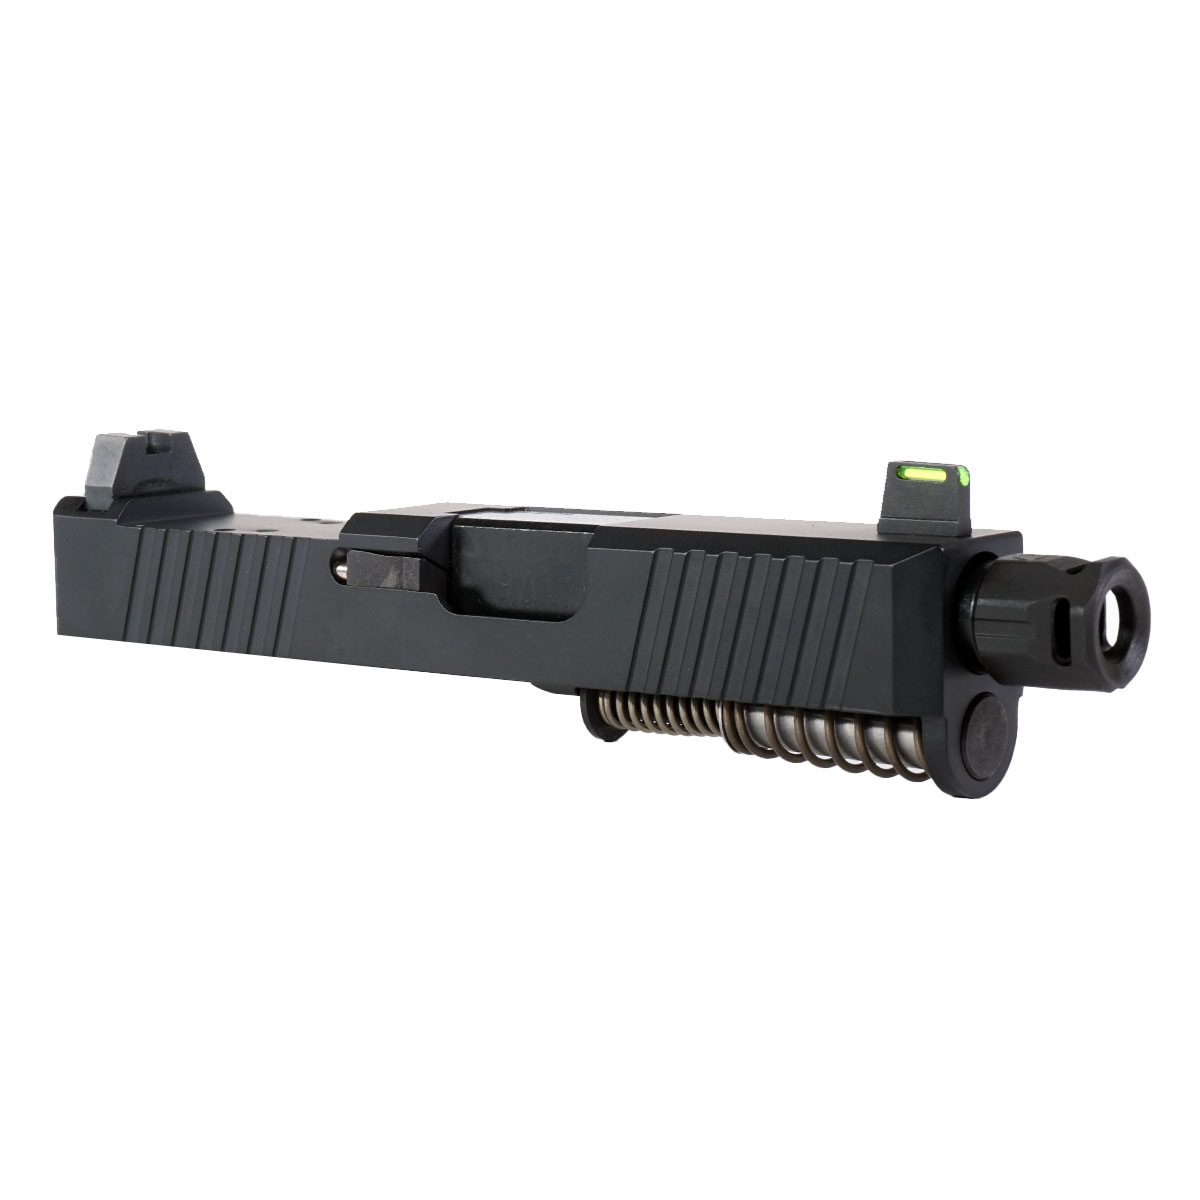 MMC 'Bad Company' 9mm Complete Slide Kit - Glock 26 Gen 1-3 Compatible